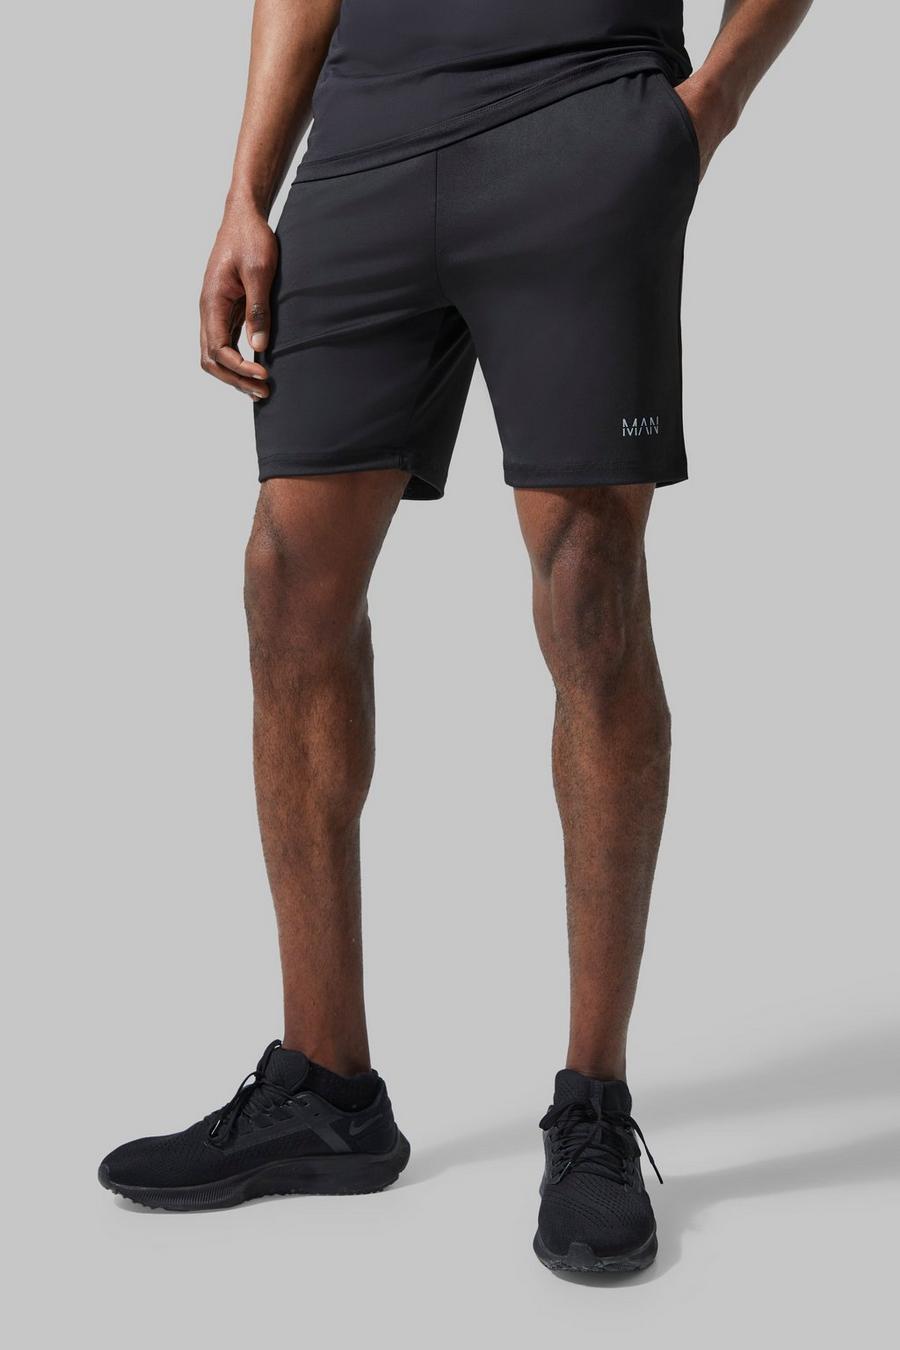 Man Active Performance Sport-Shorts, Black schwarz